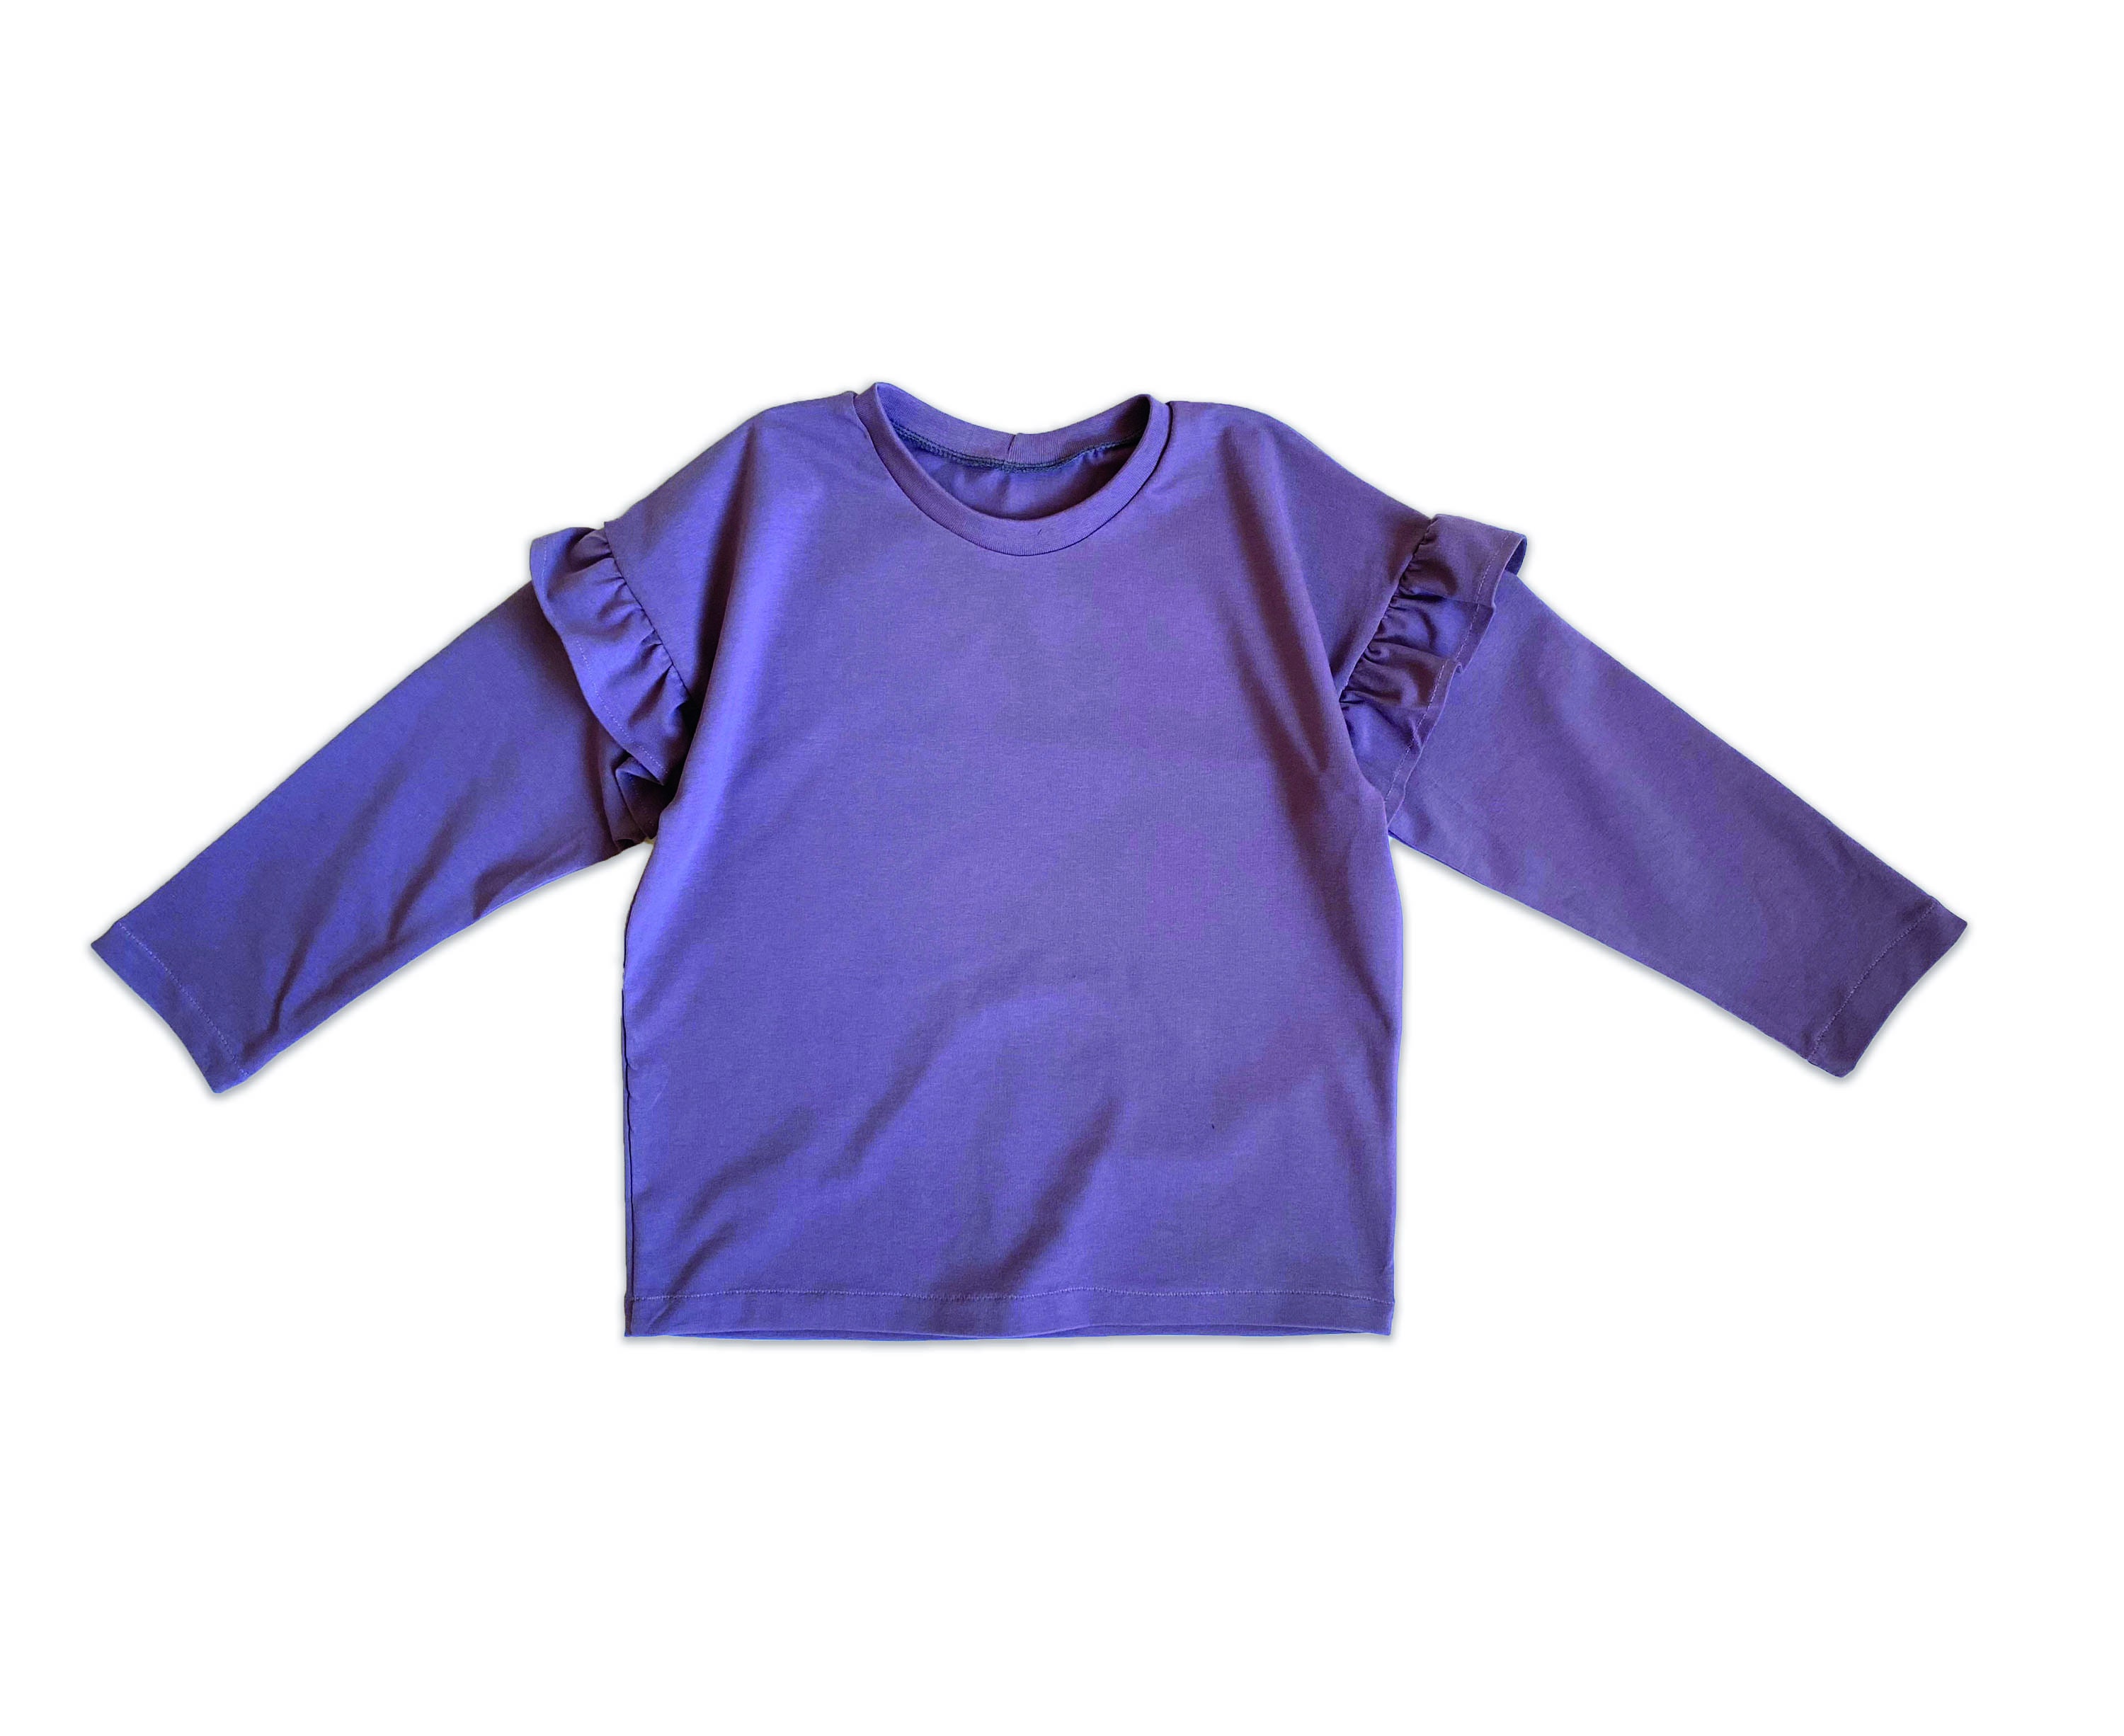 Boxy Tee Sewing Patter, Toddler T-shirt Pattern, T-shirt Sleeve - Oversized Digital Ruffle Etsy Pattern, Pocket Pattern Sewing Pattern Baby T-shirt